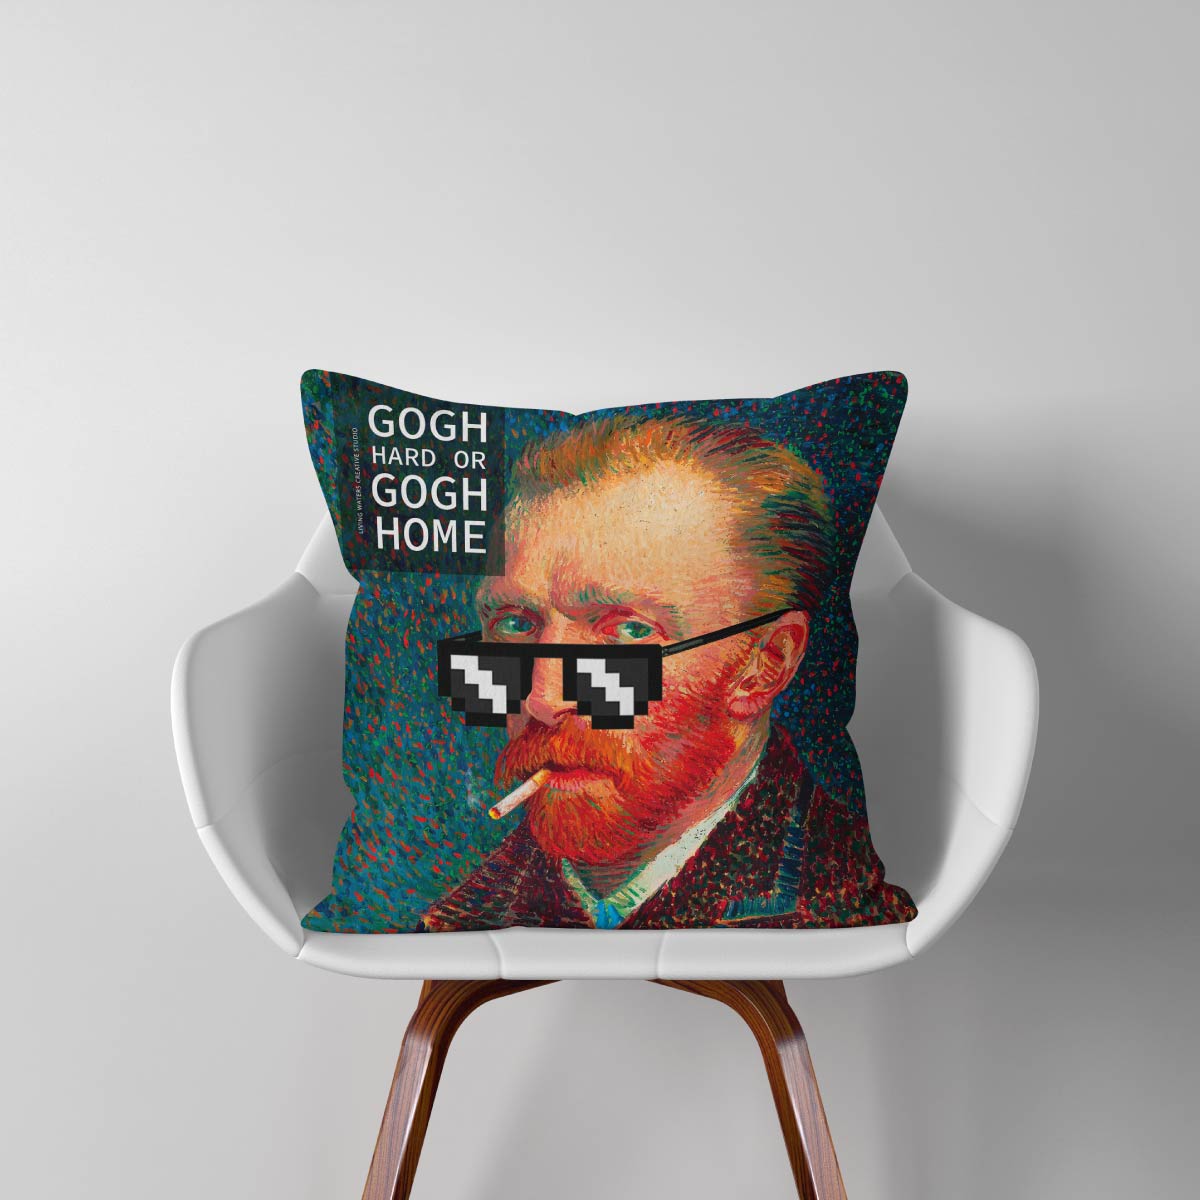 The Big Gogh Hard Cushion Cover